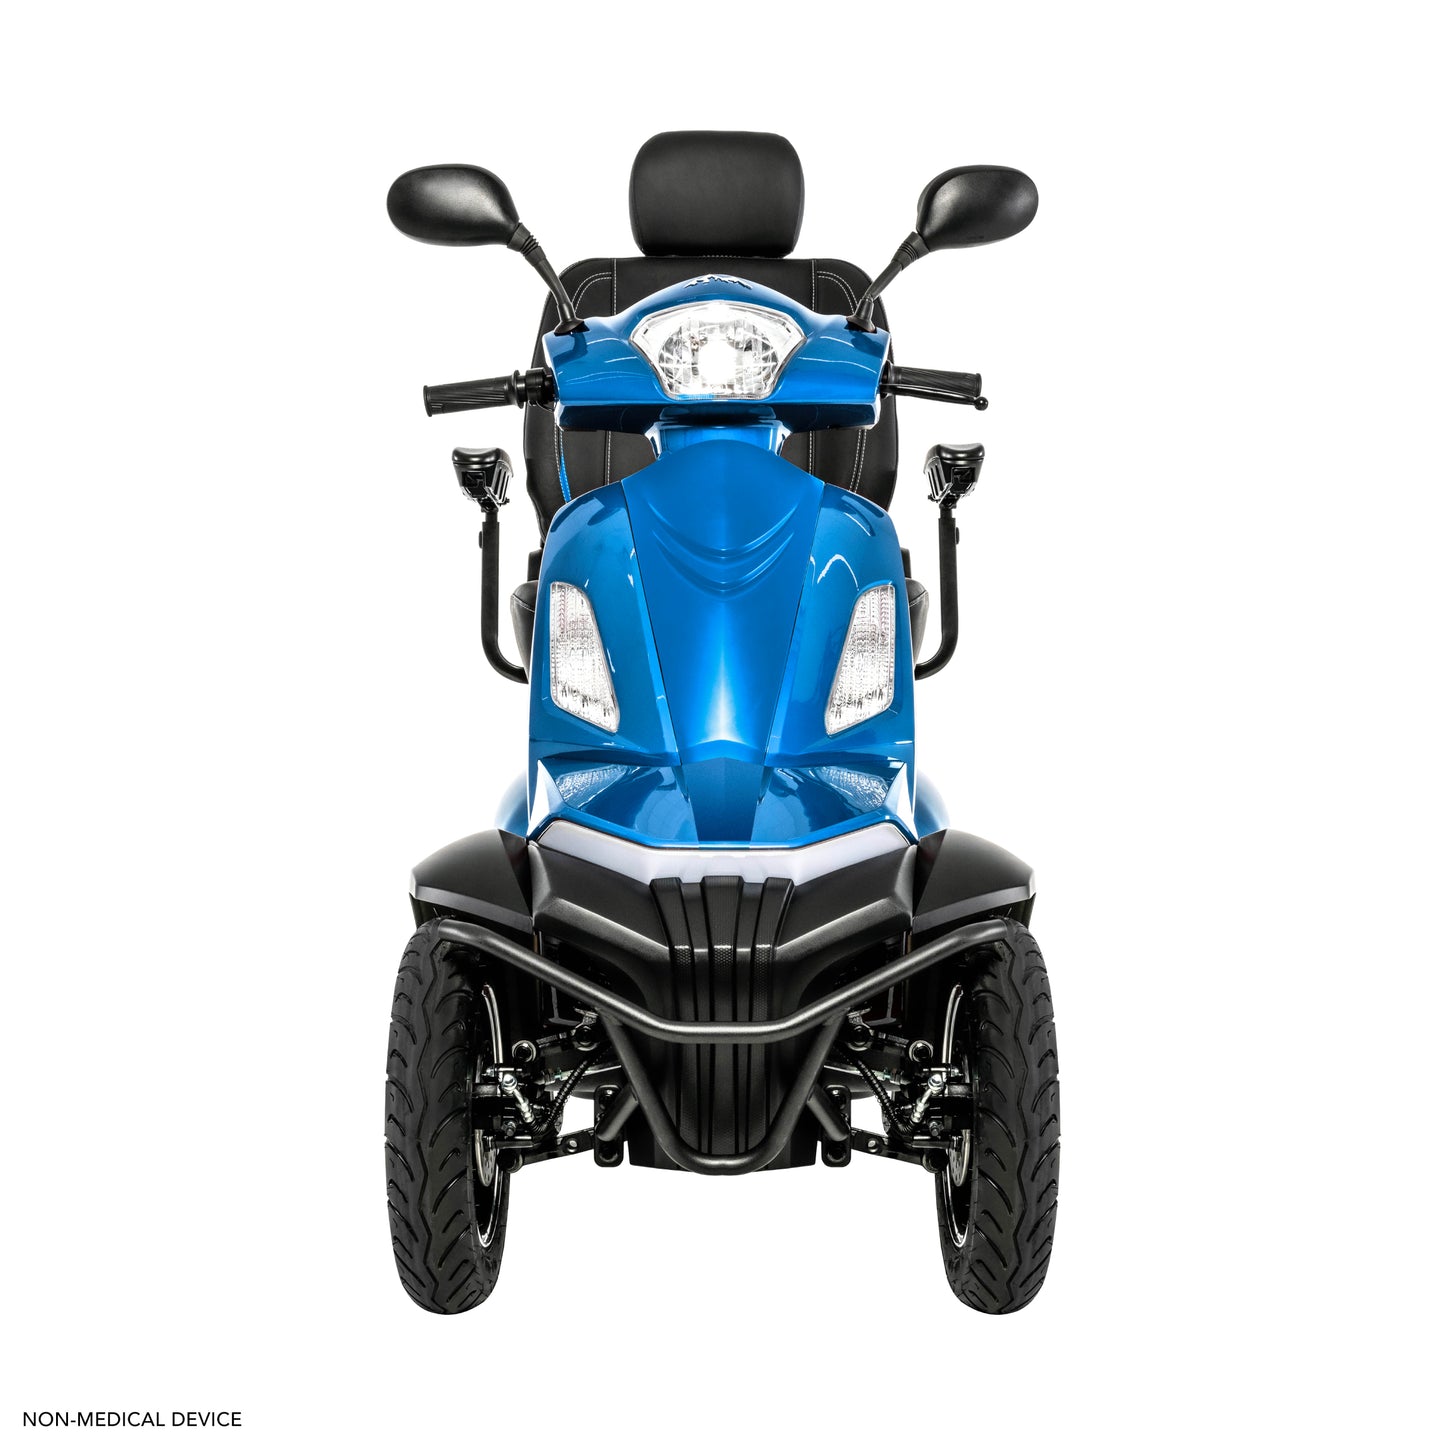 BAJA® Raptor 2 4-Wheel Mobility Scooter